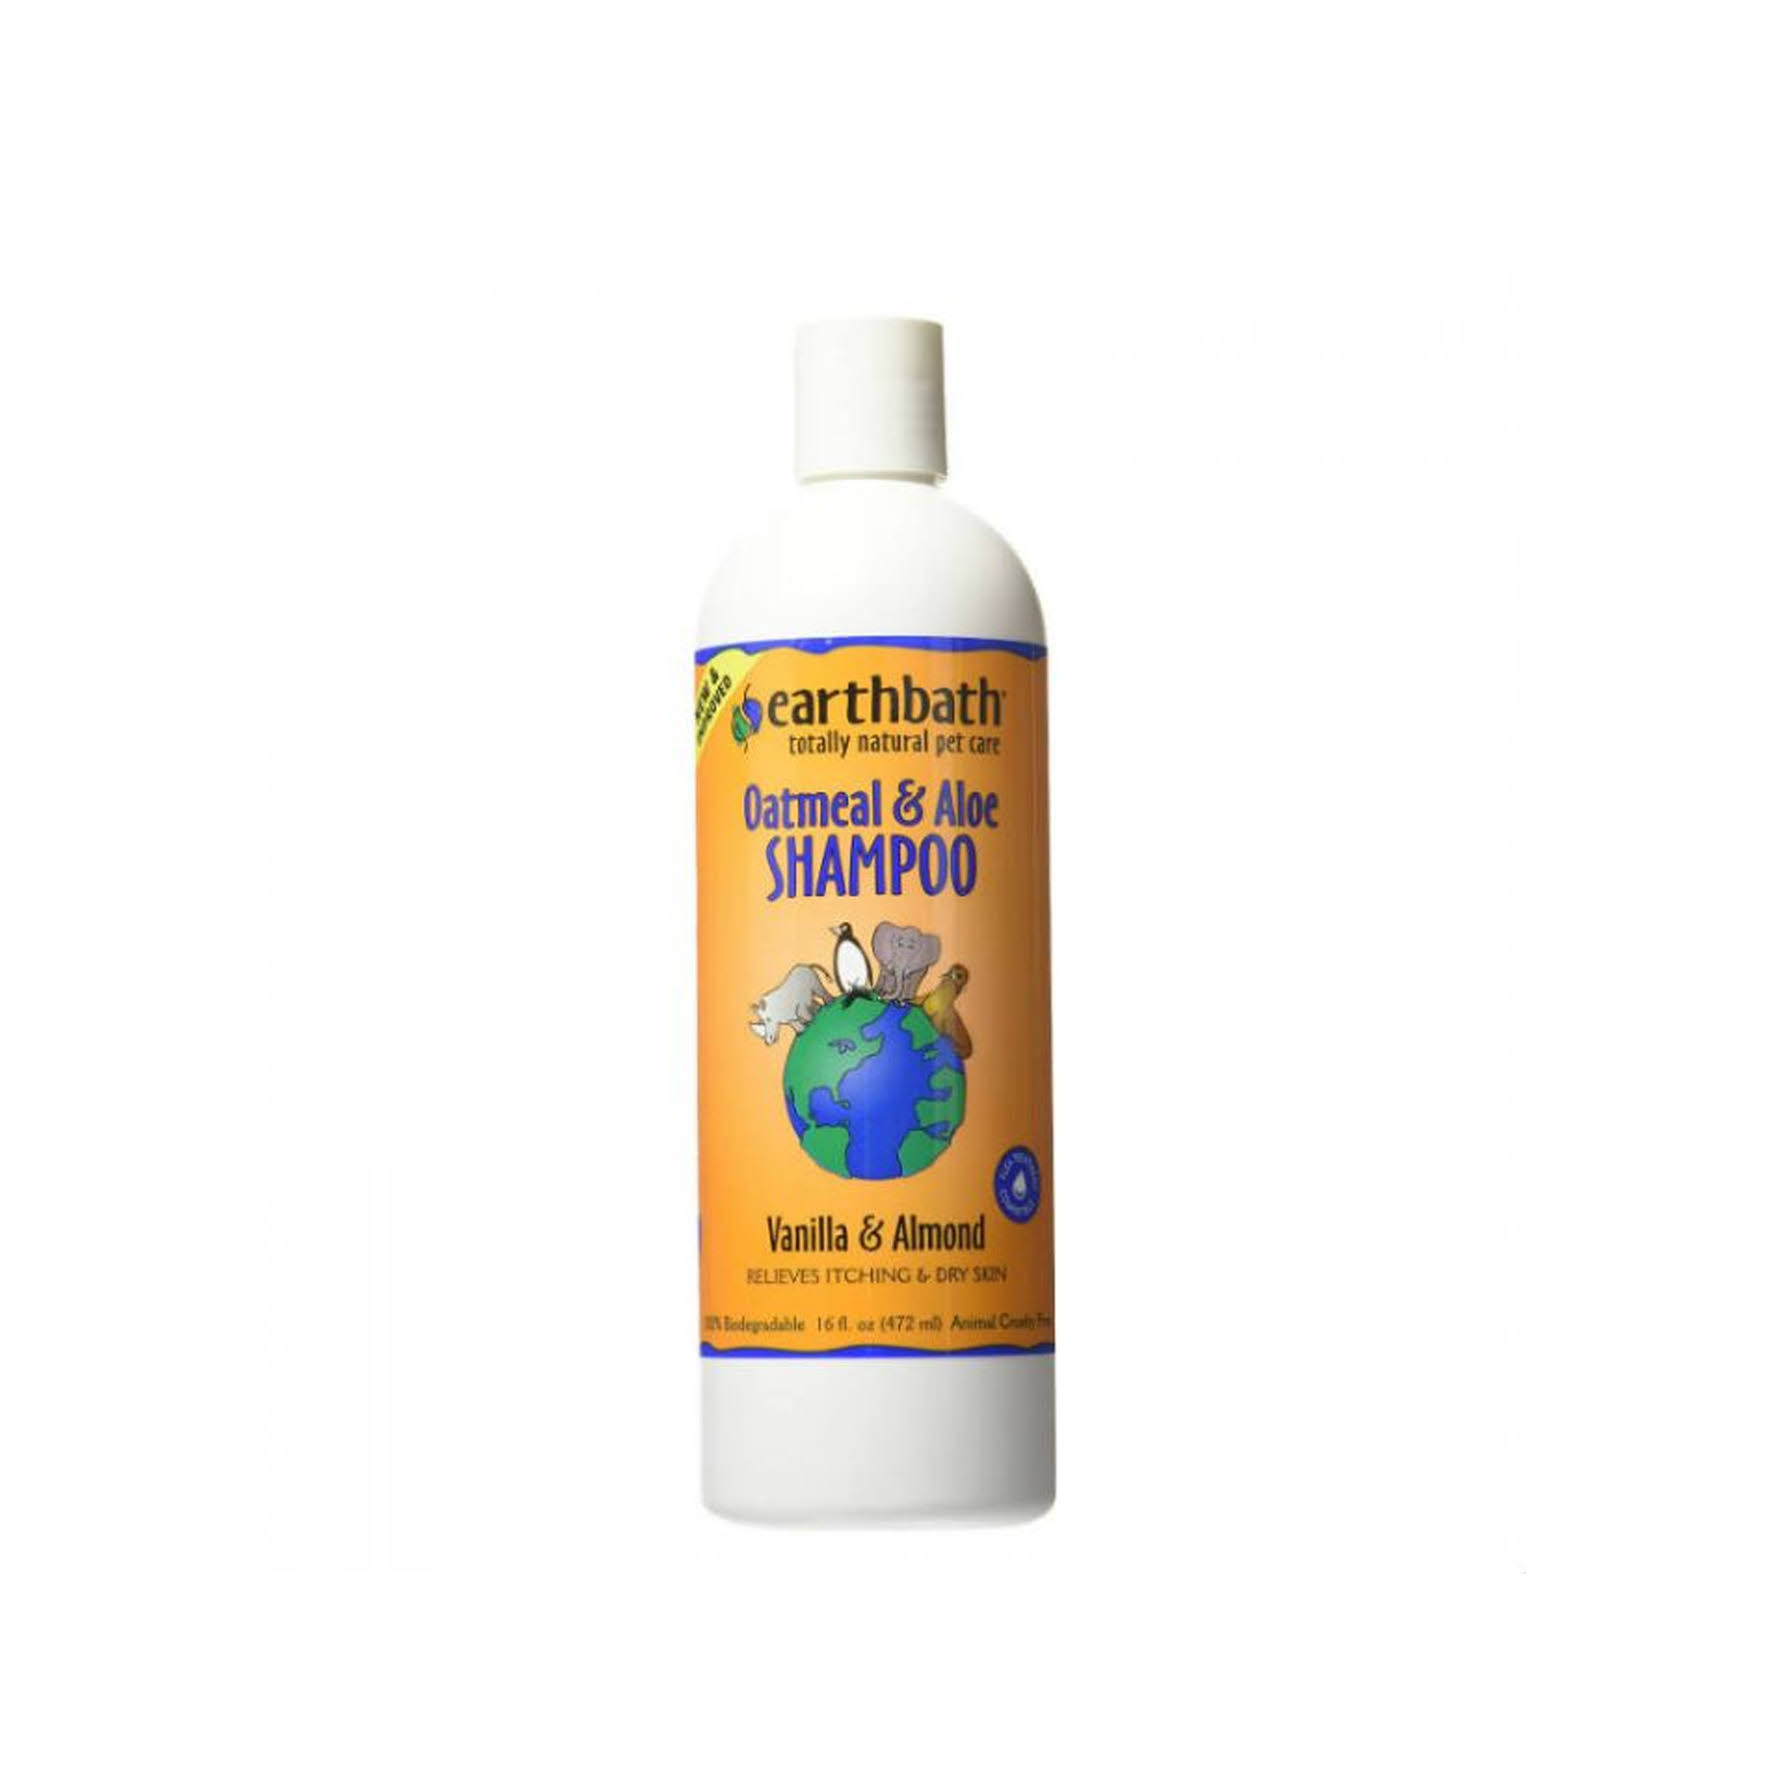 Earthbath All Natural Dog Shampoo - Oatmeal & Aloe